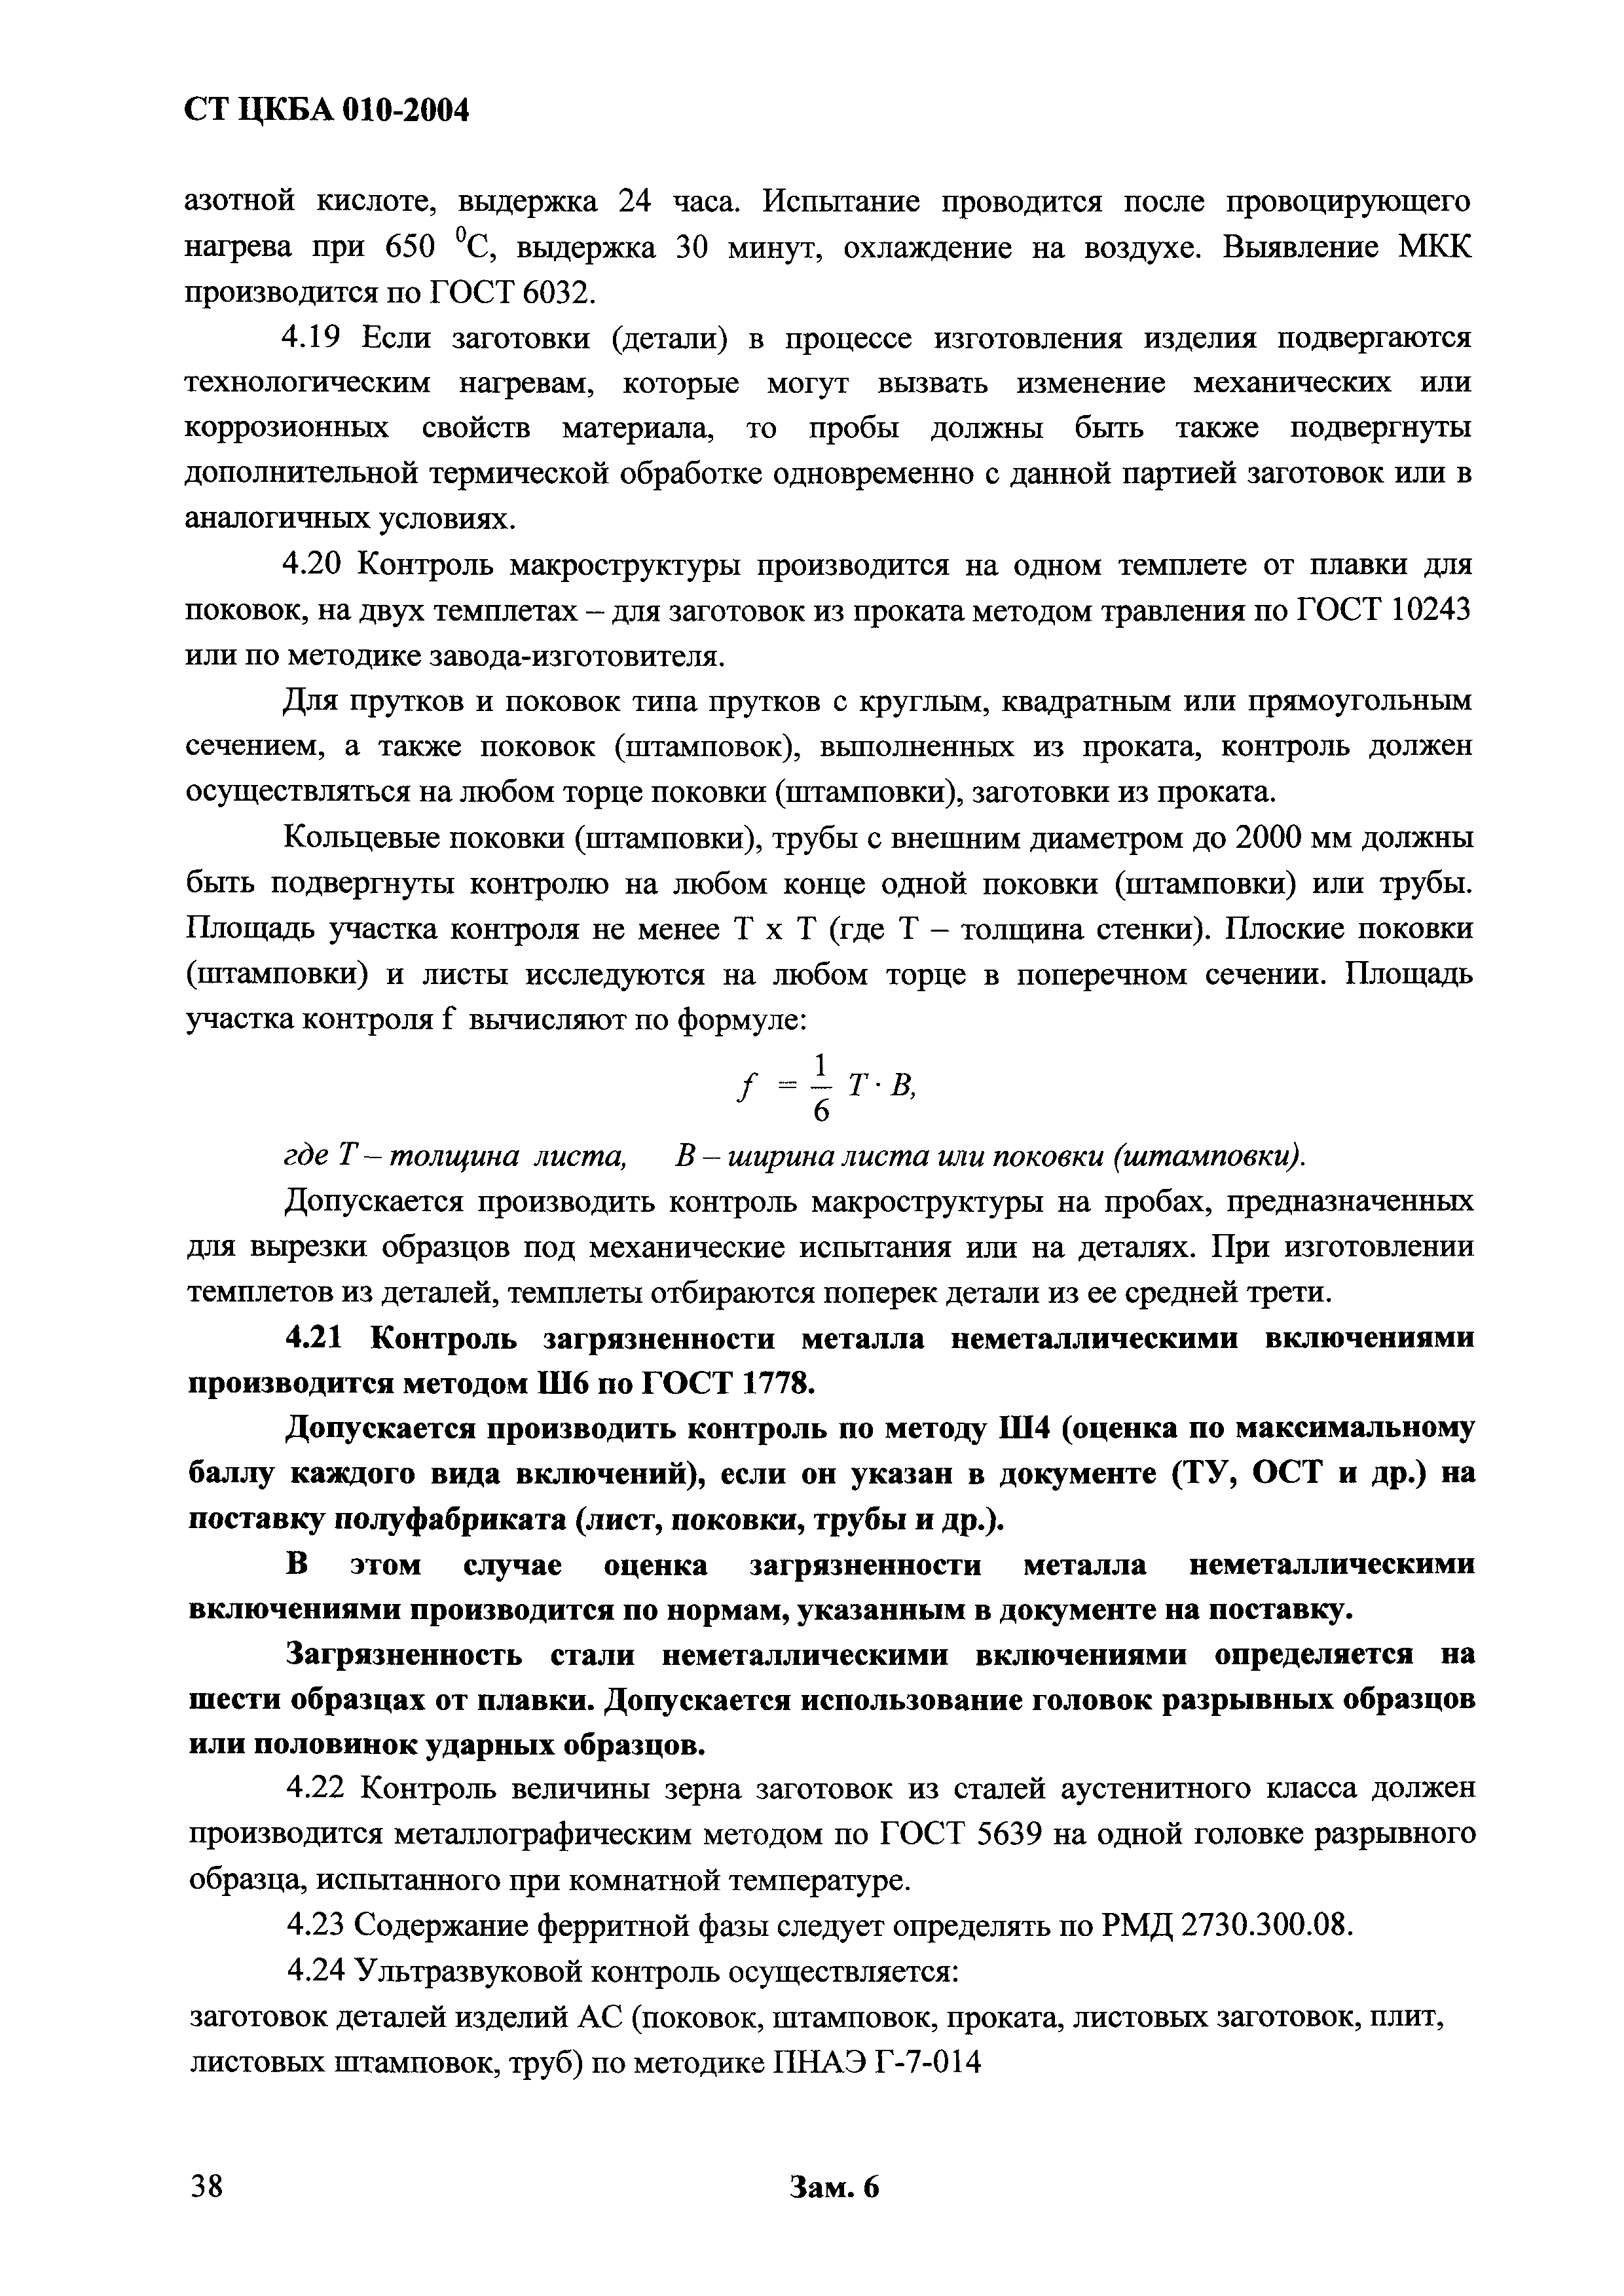 СТ ЦКБА 010-2004